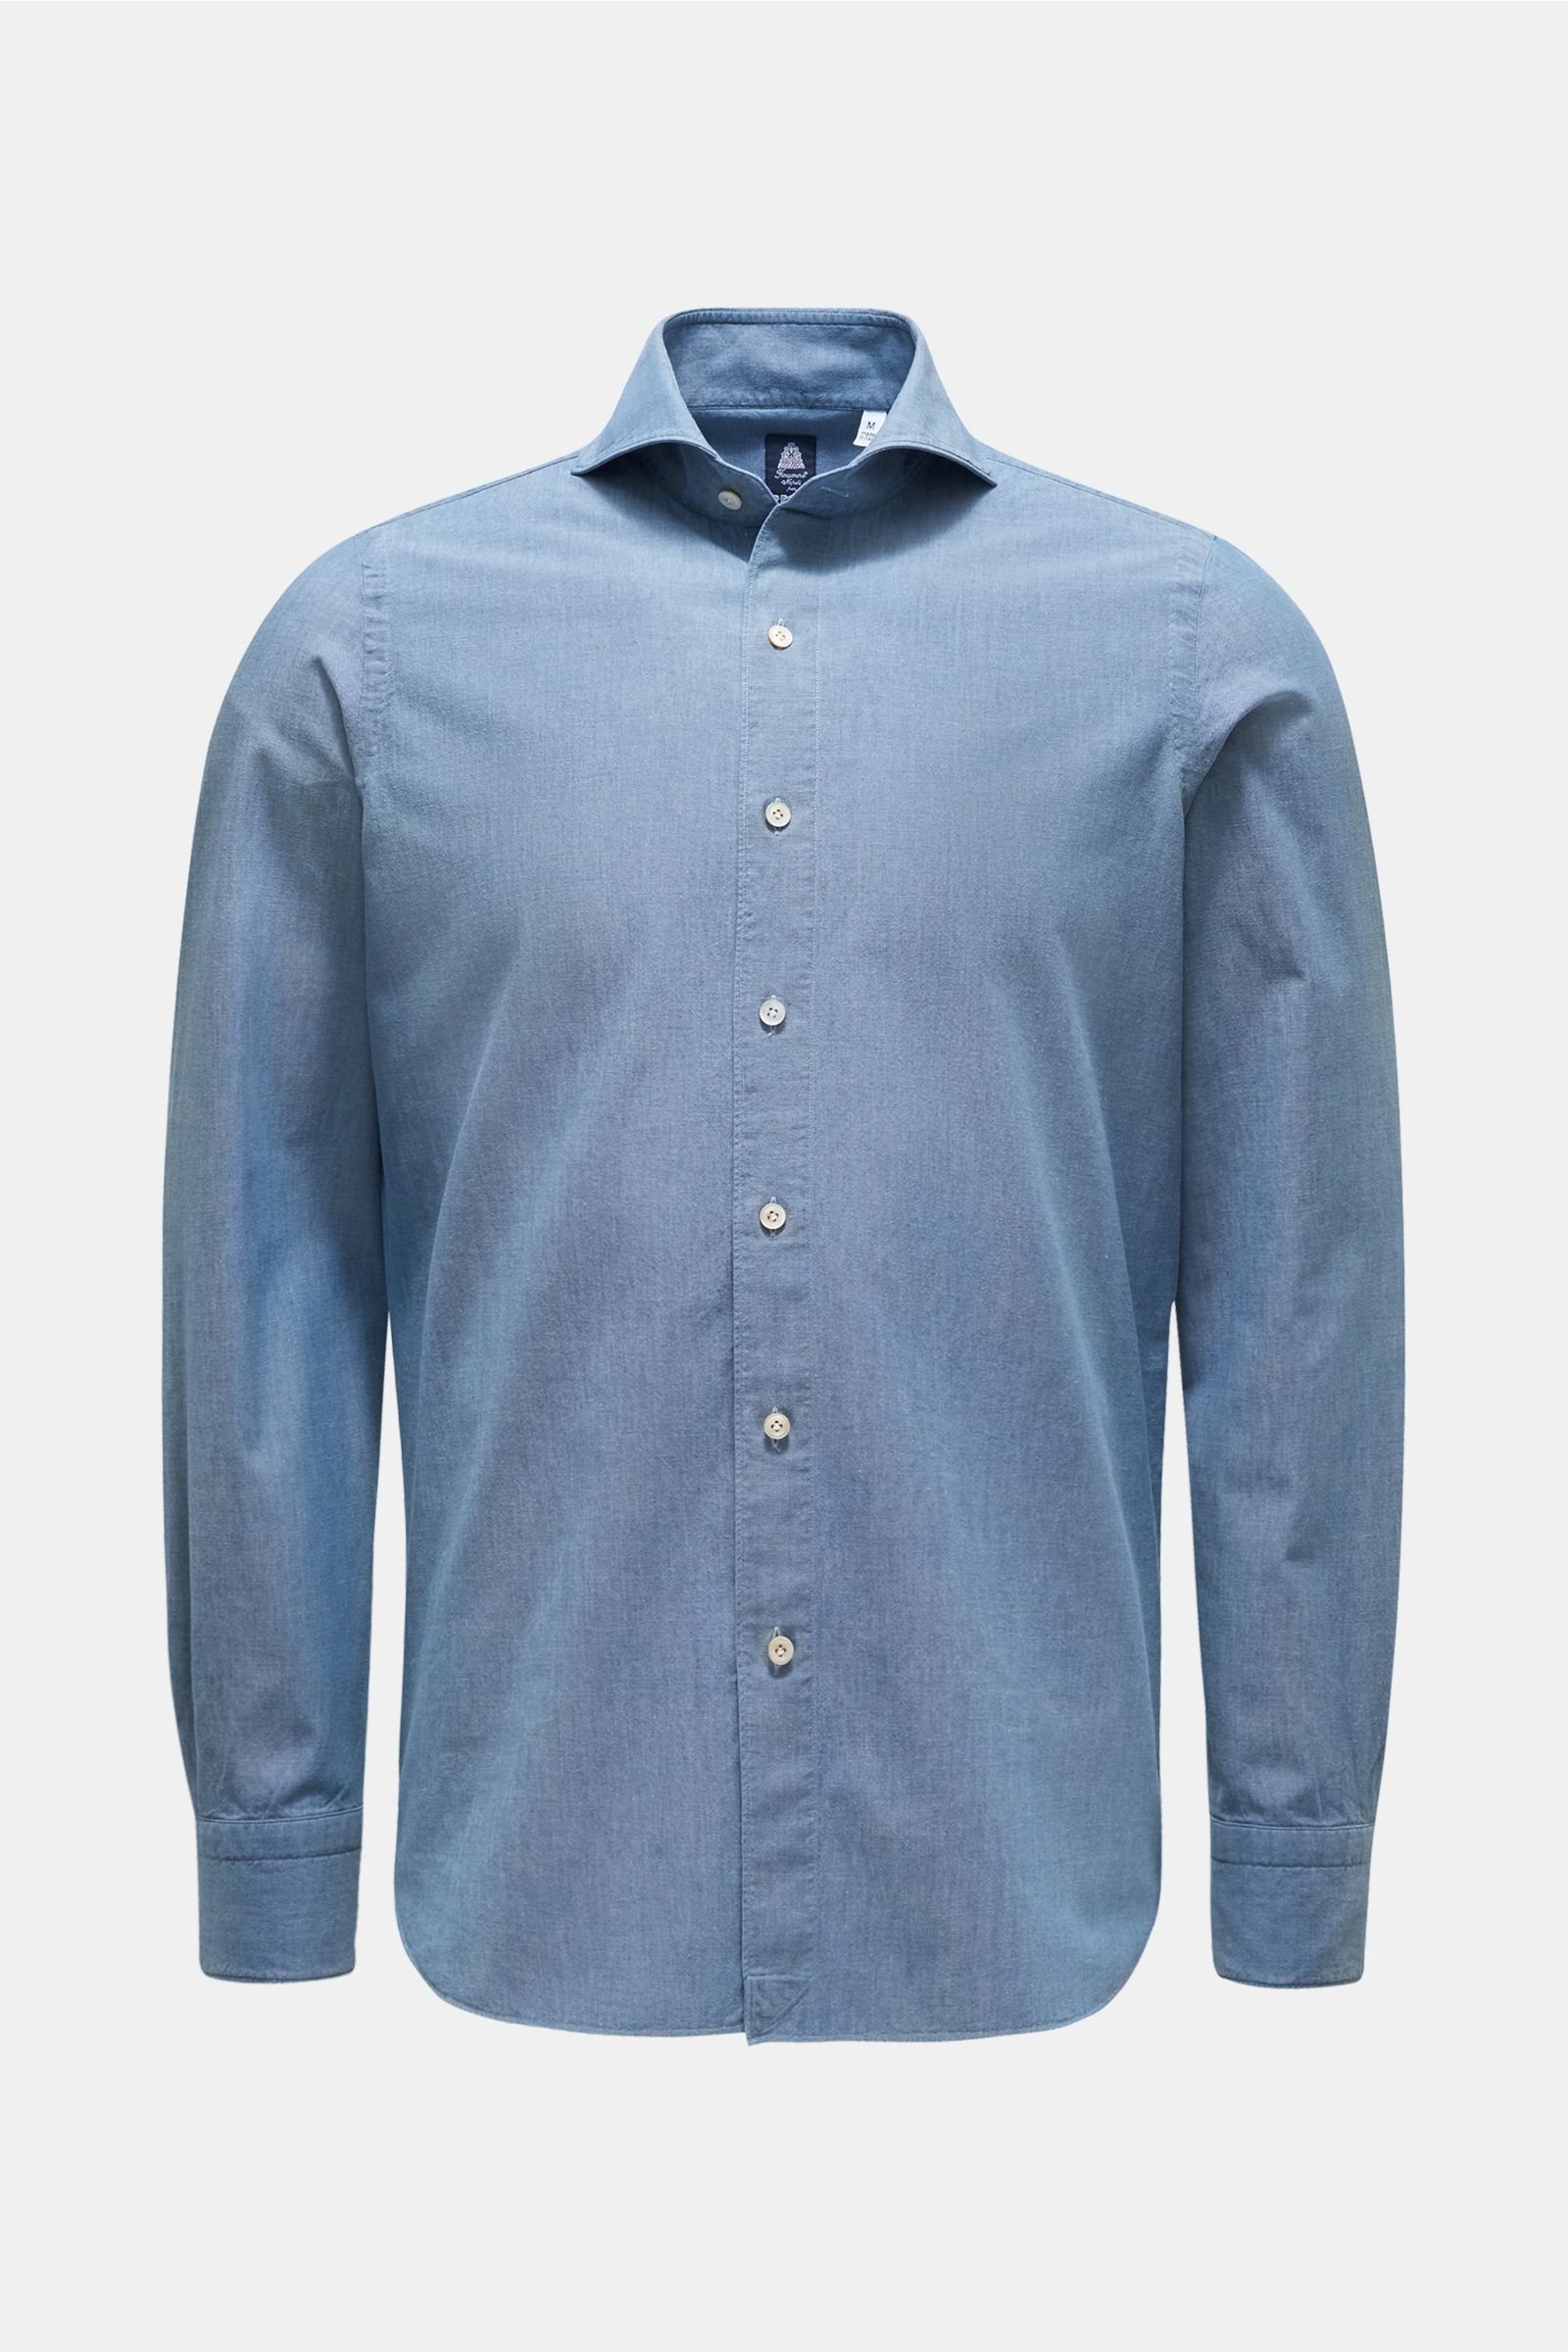 Chambray shirt 'Sergio Gaeta' shark collar grey-blue